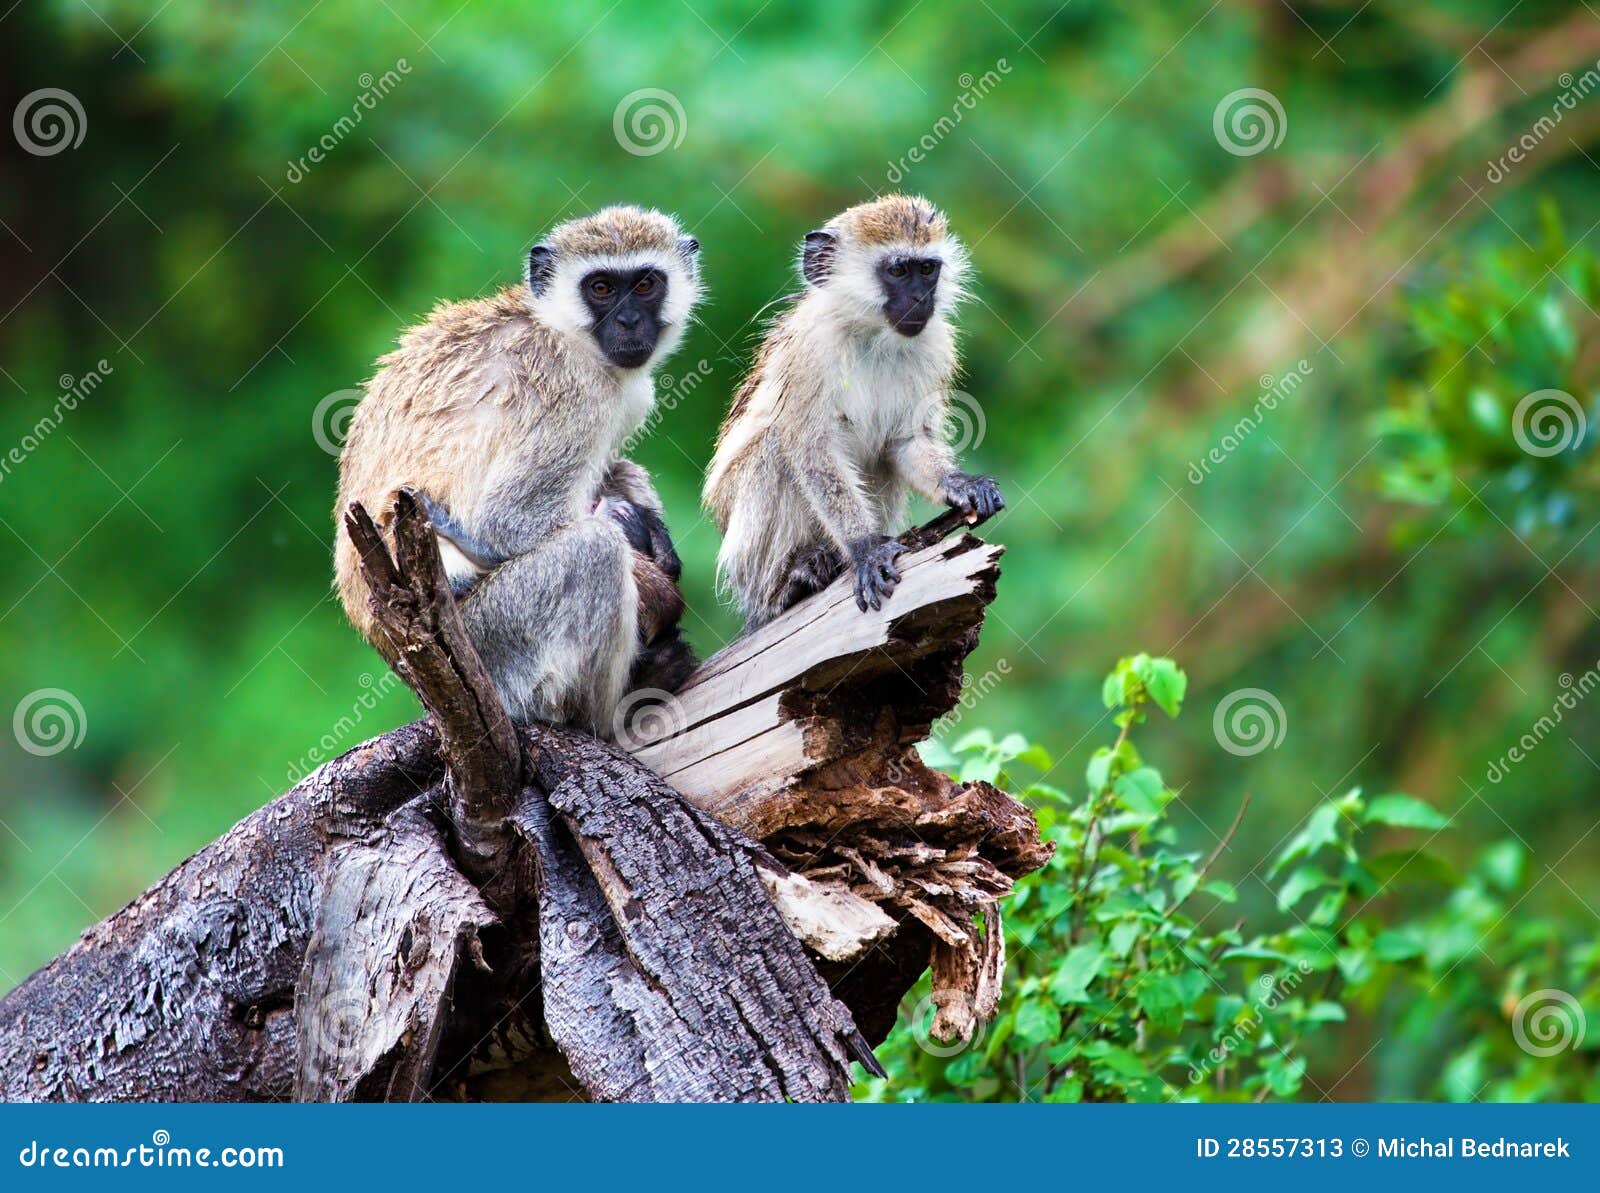 the vervet monkey, lake manyara, tanzania, africa.